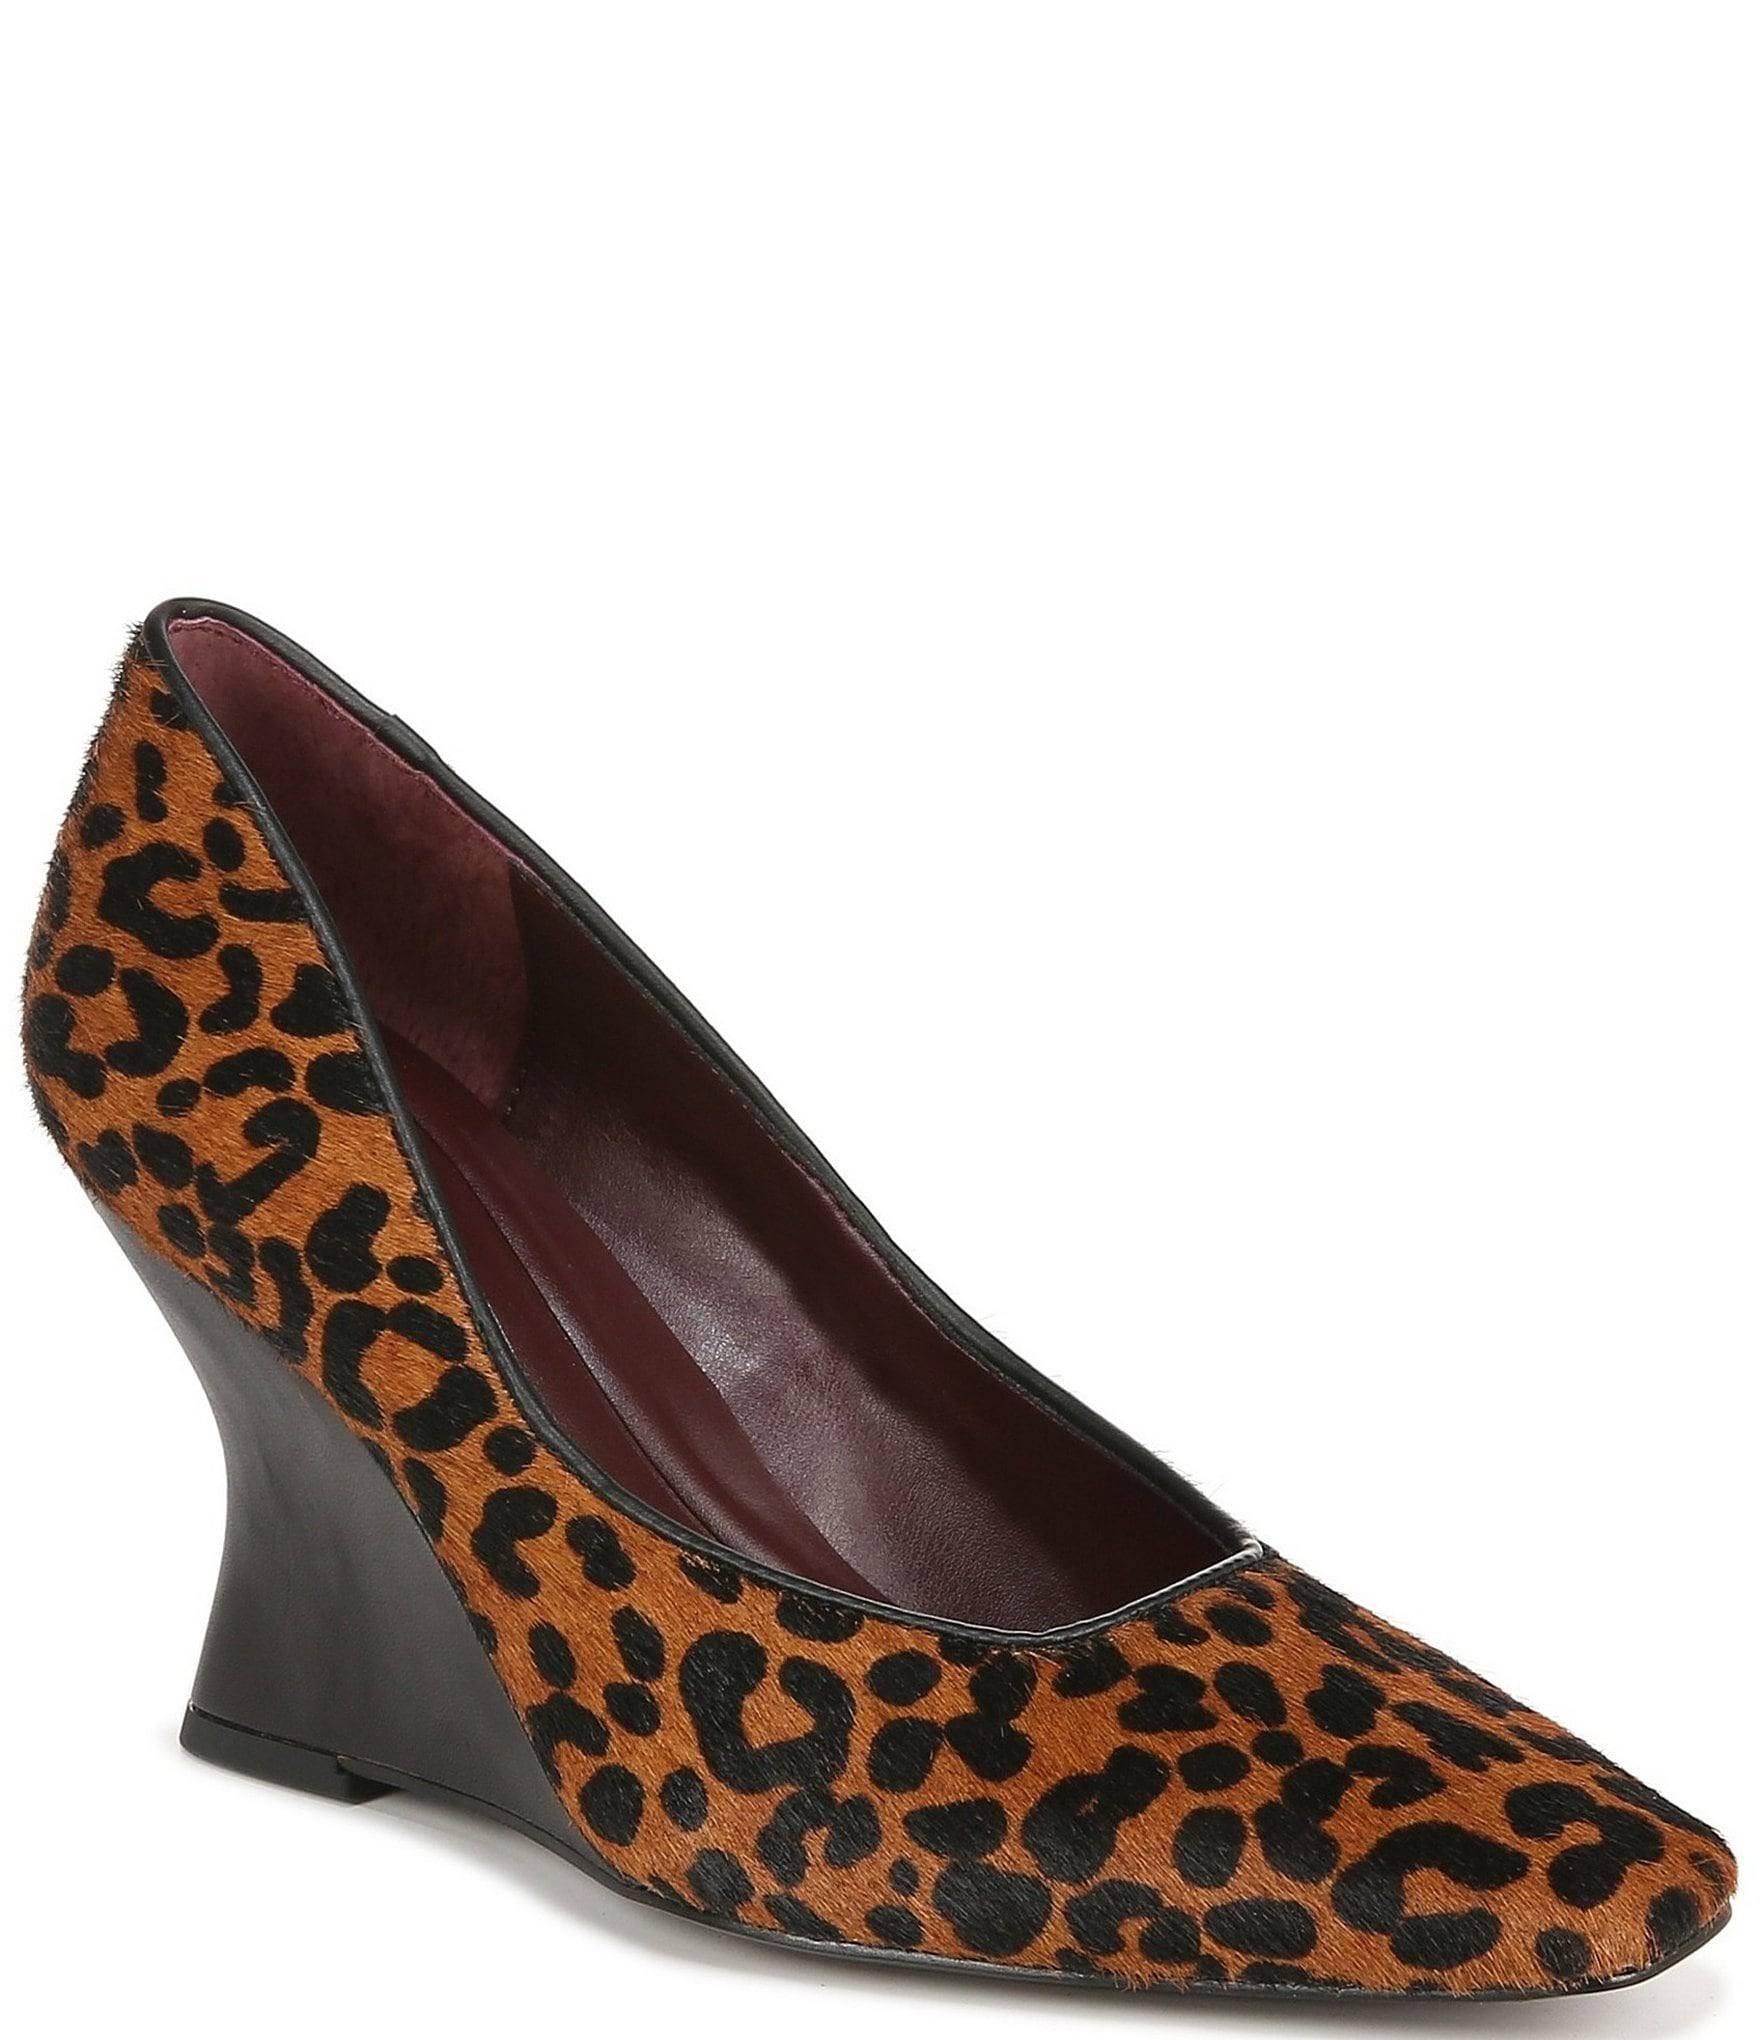 Sarto by Franco Sarto Carina Leopard Print Heels - Stylish, Fashionable, and Comfortable | Image